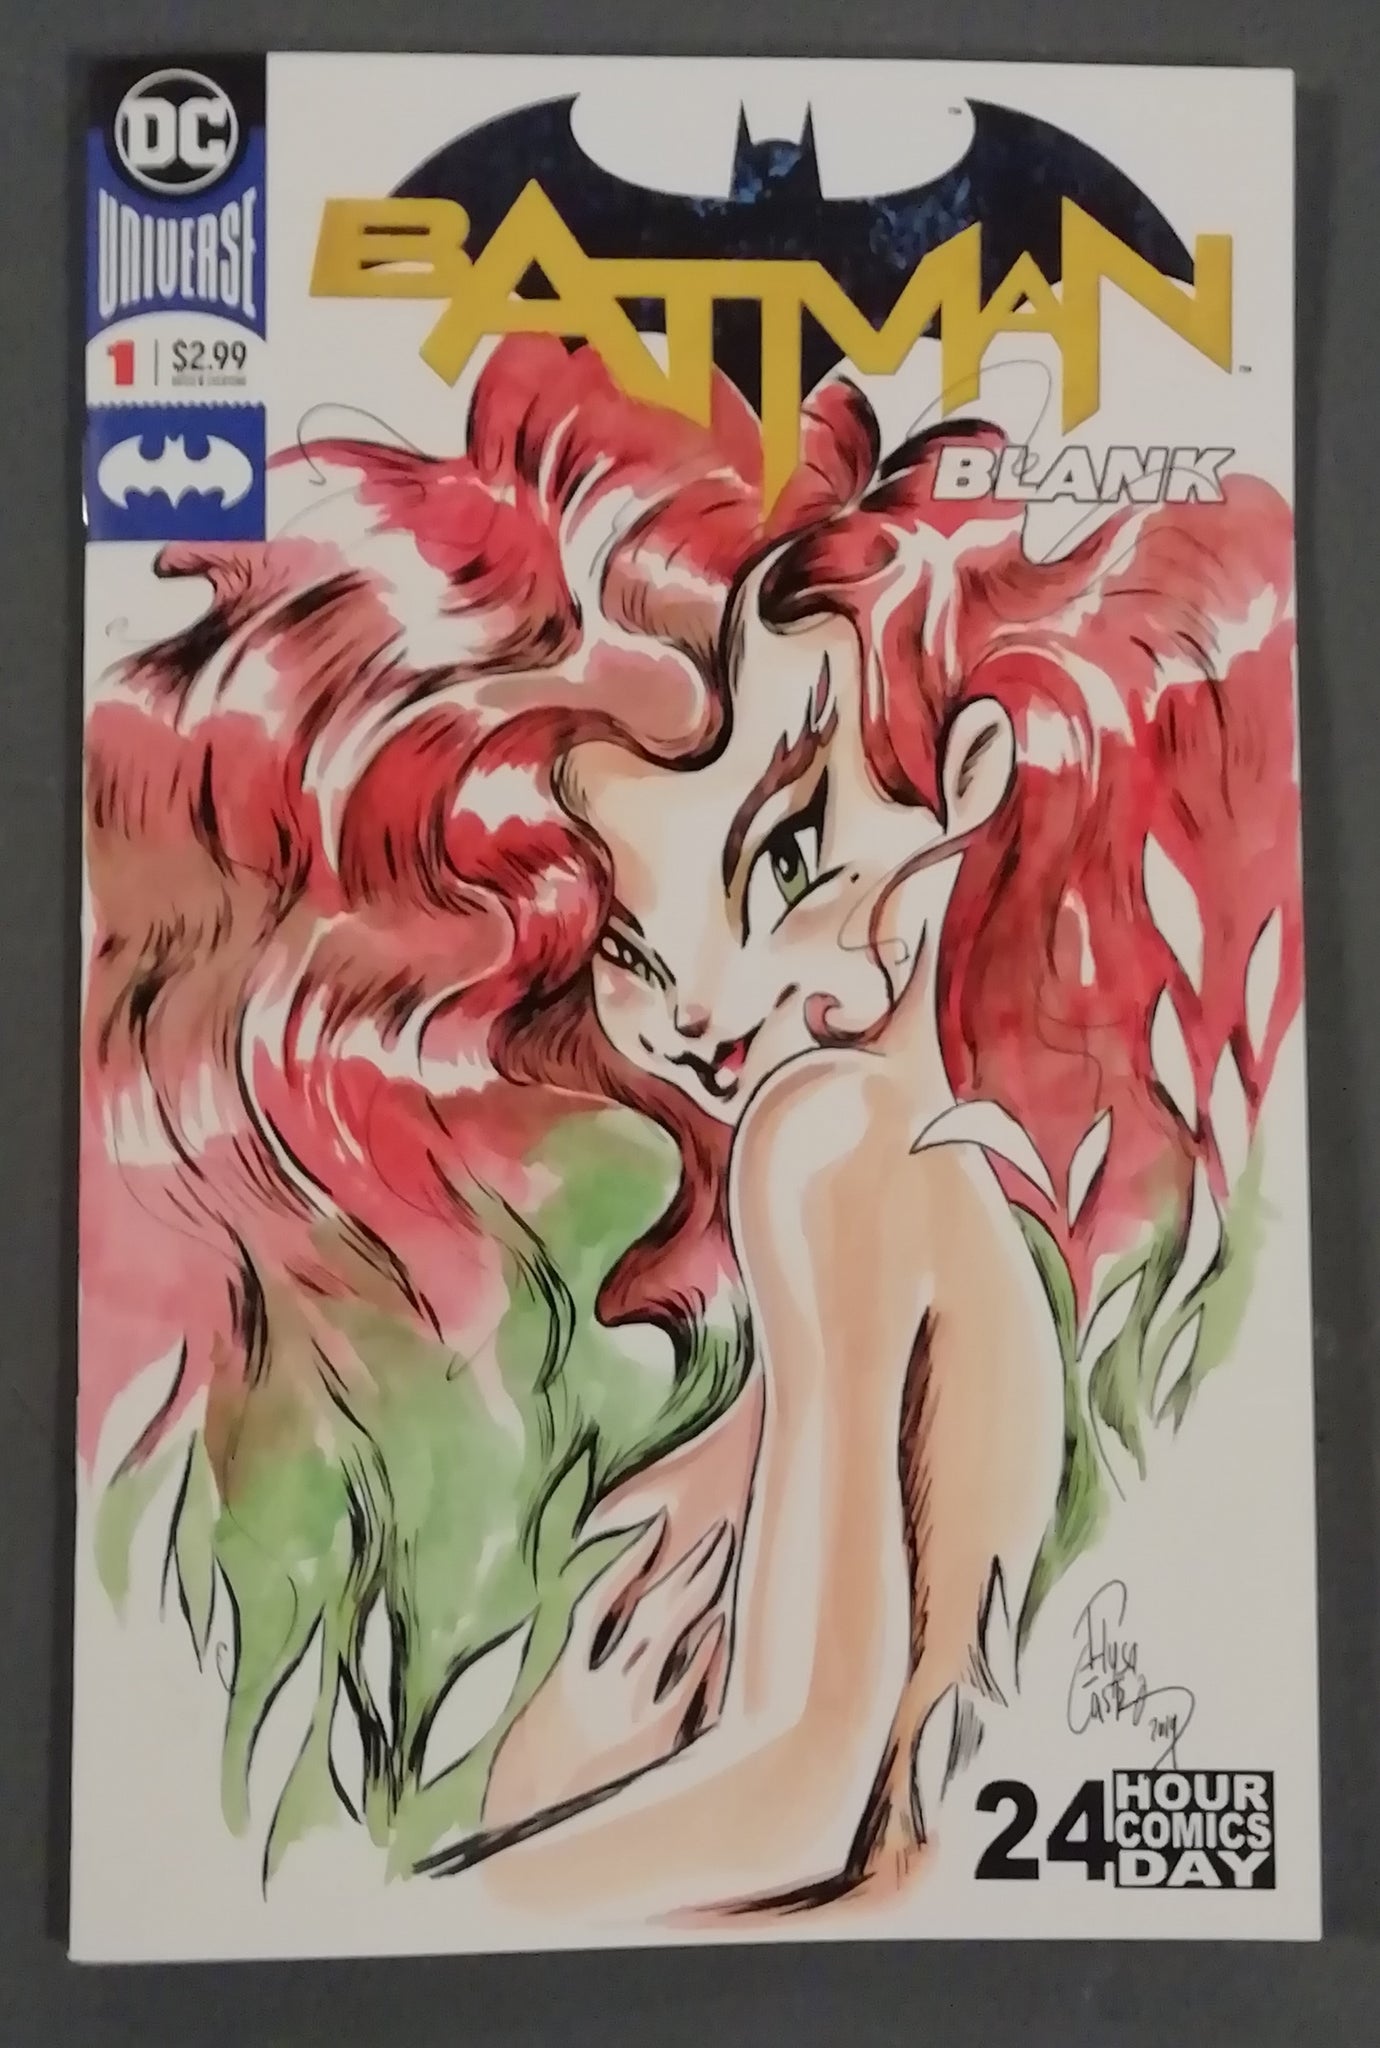 Batman #1 "Poison Ivy" Original Art Cover by Elysa Castro